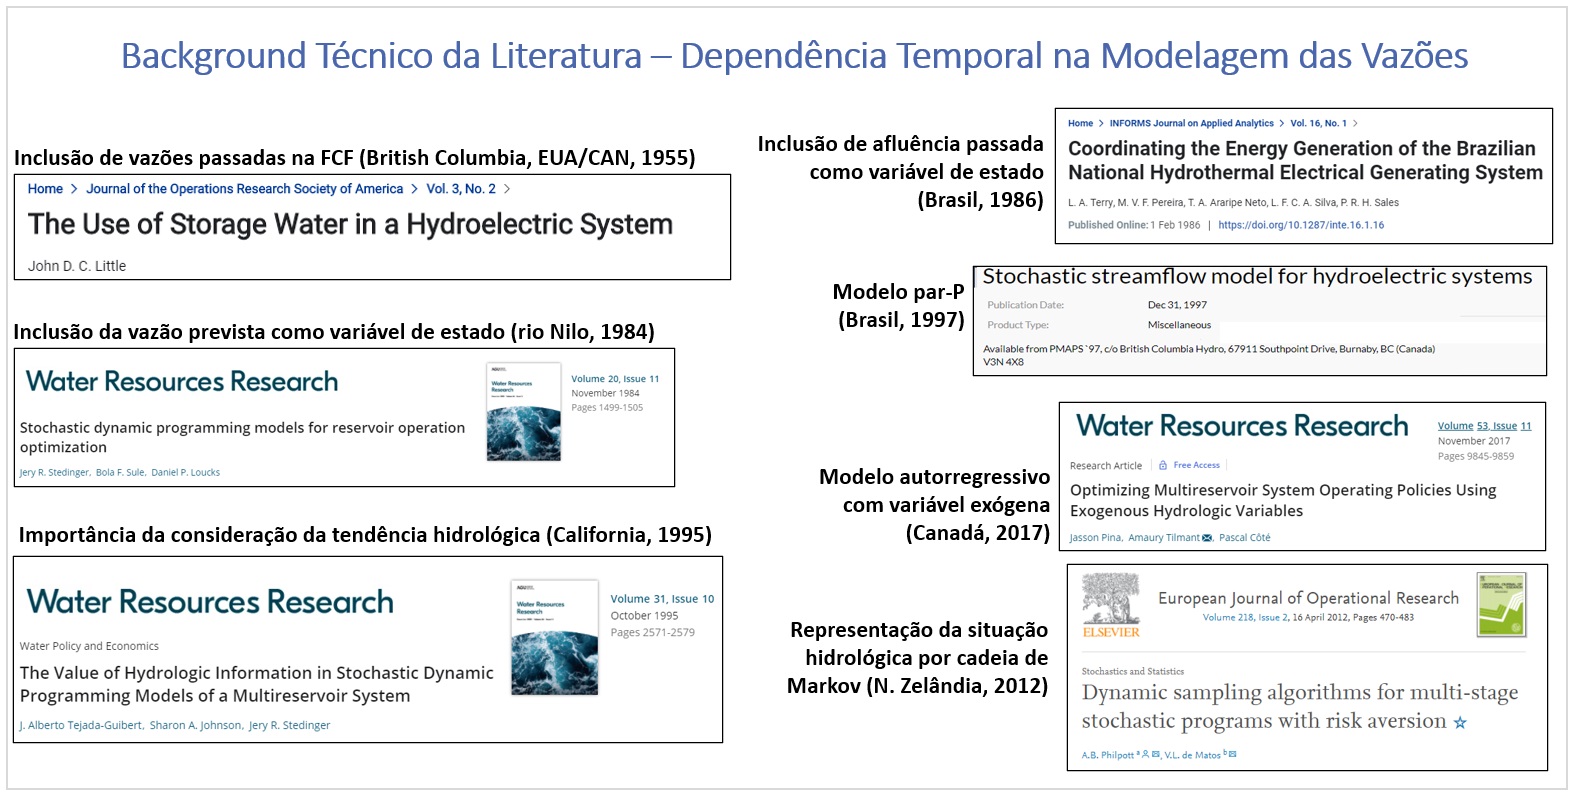 ../_images/revisao-literatura-dependencia-temporal-hidrologia.jpg